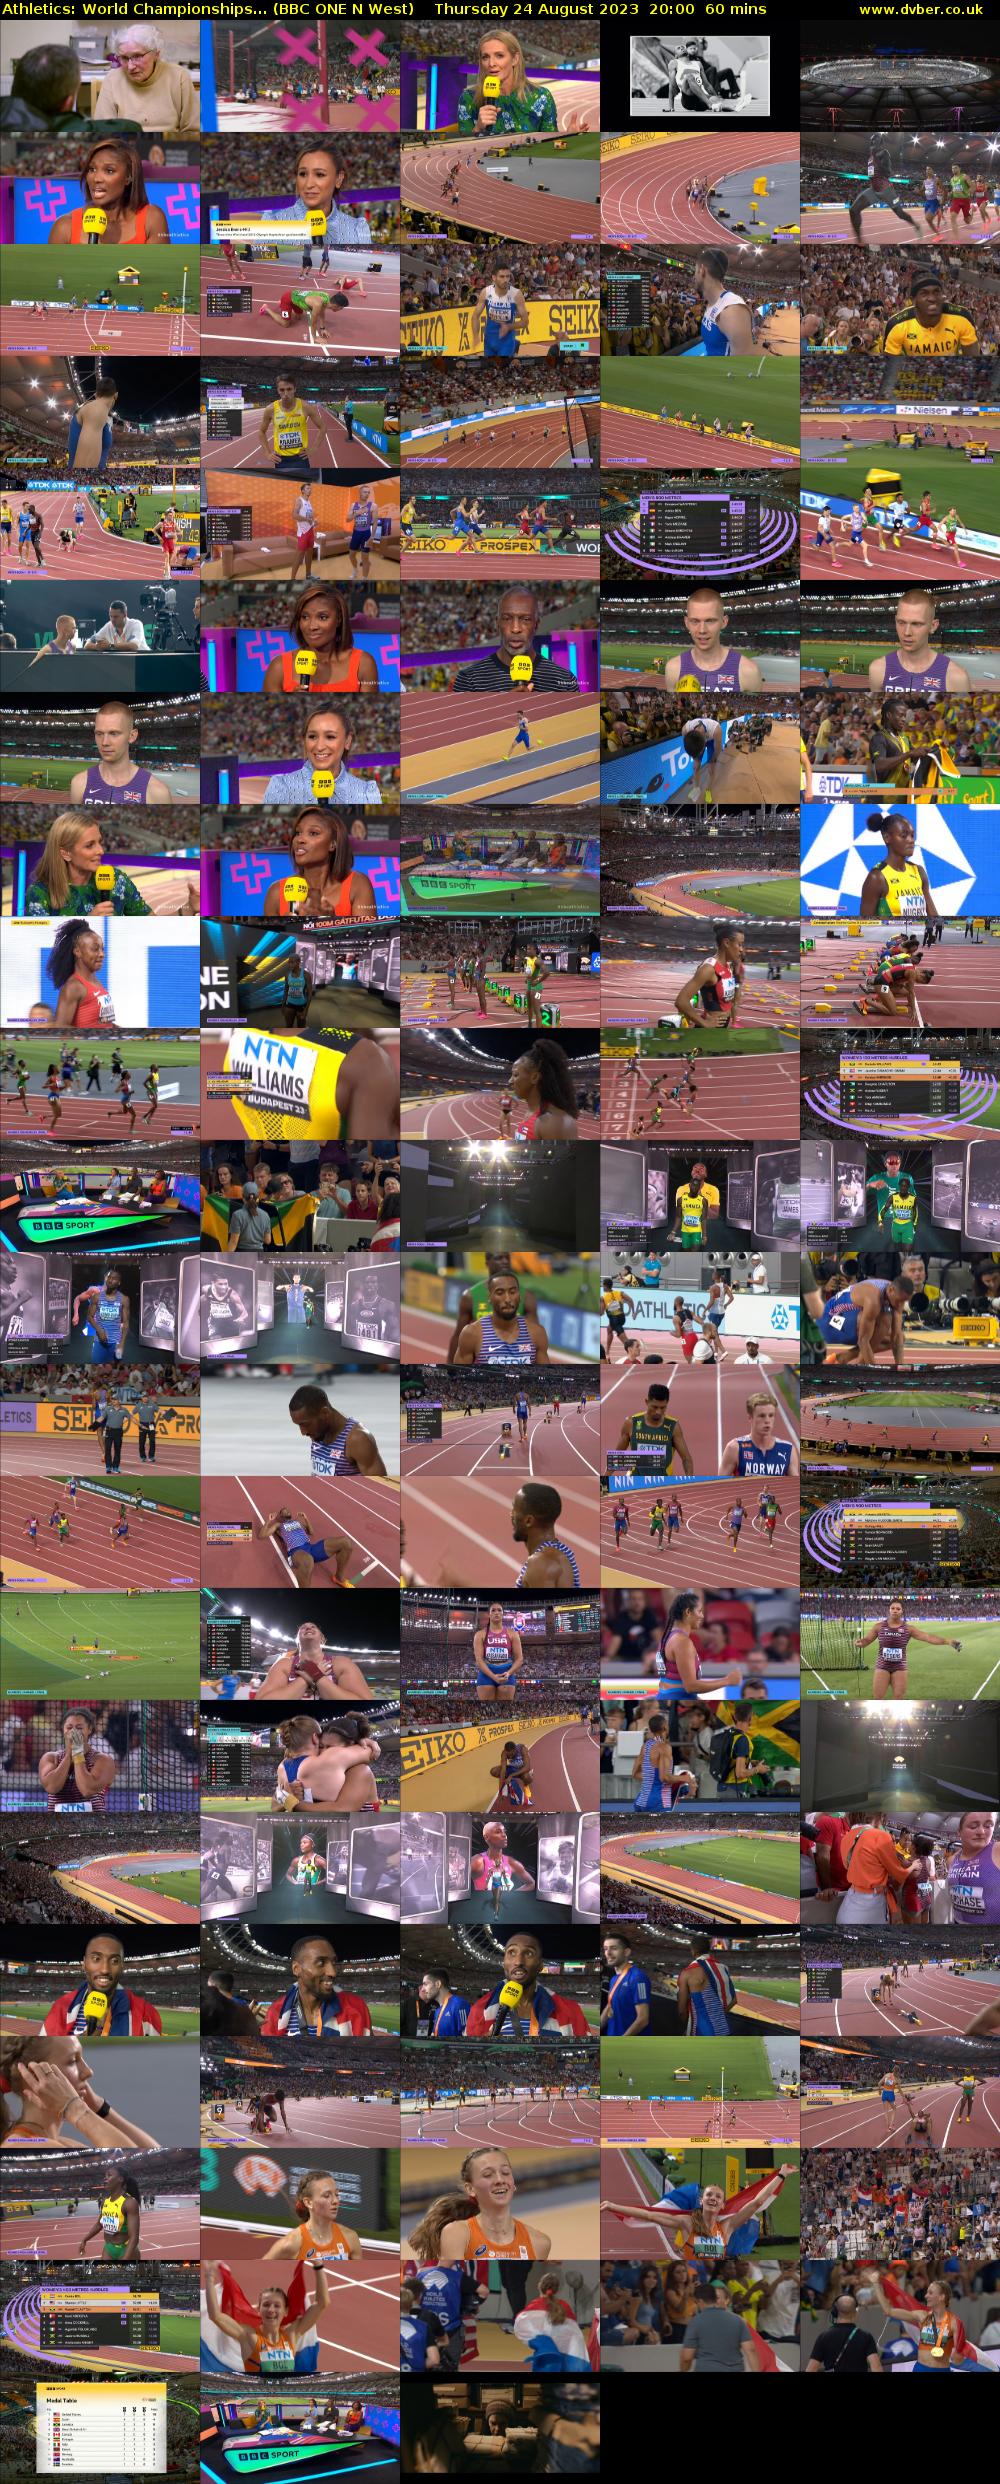 Athletics: World Championships... (BBC ONE N West) Thursday 24 August 2023 20:00 - 21:00